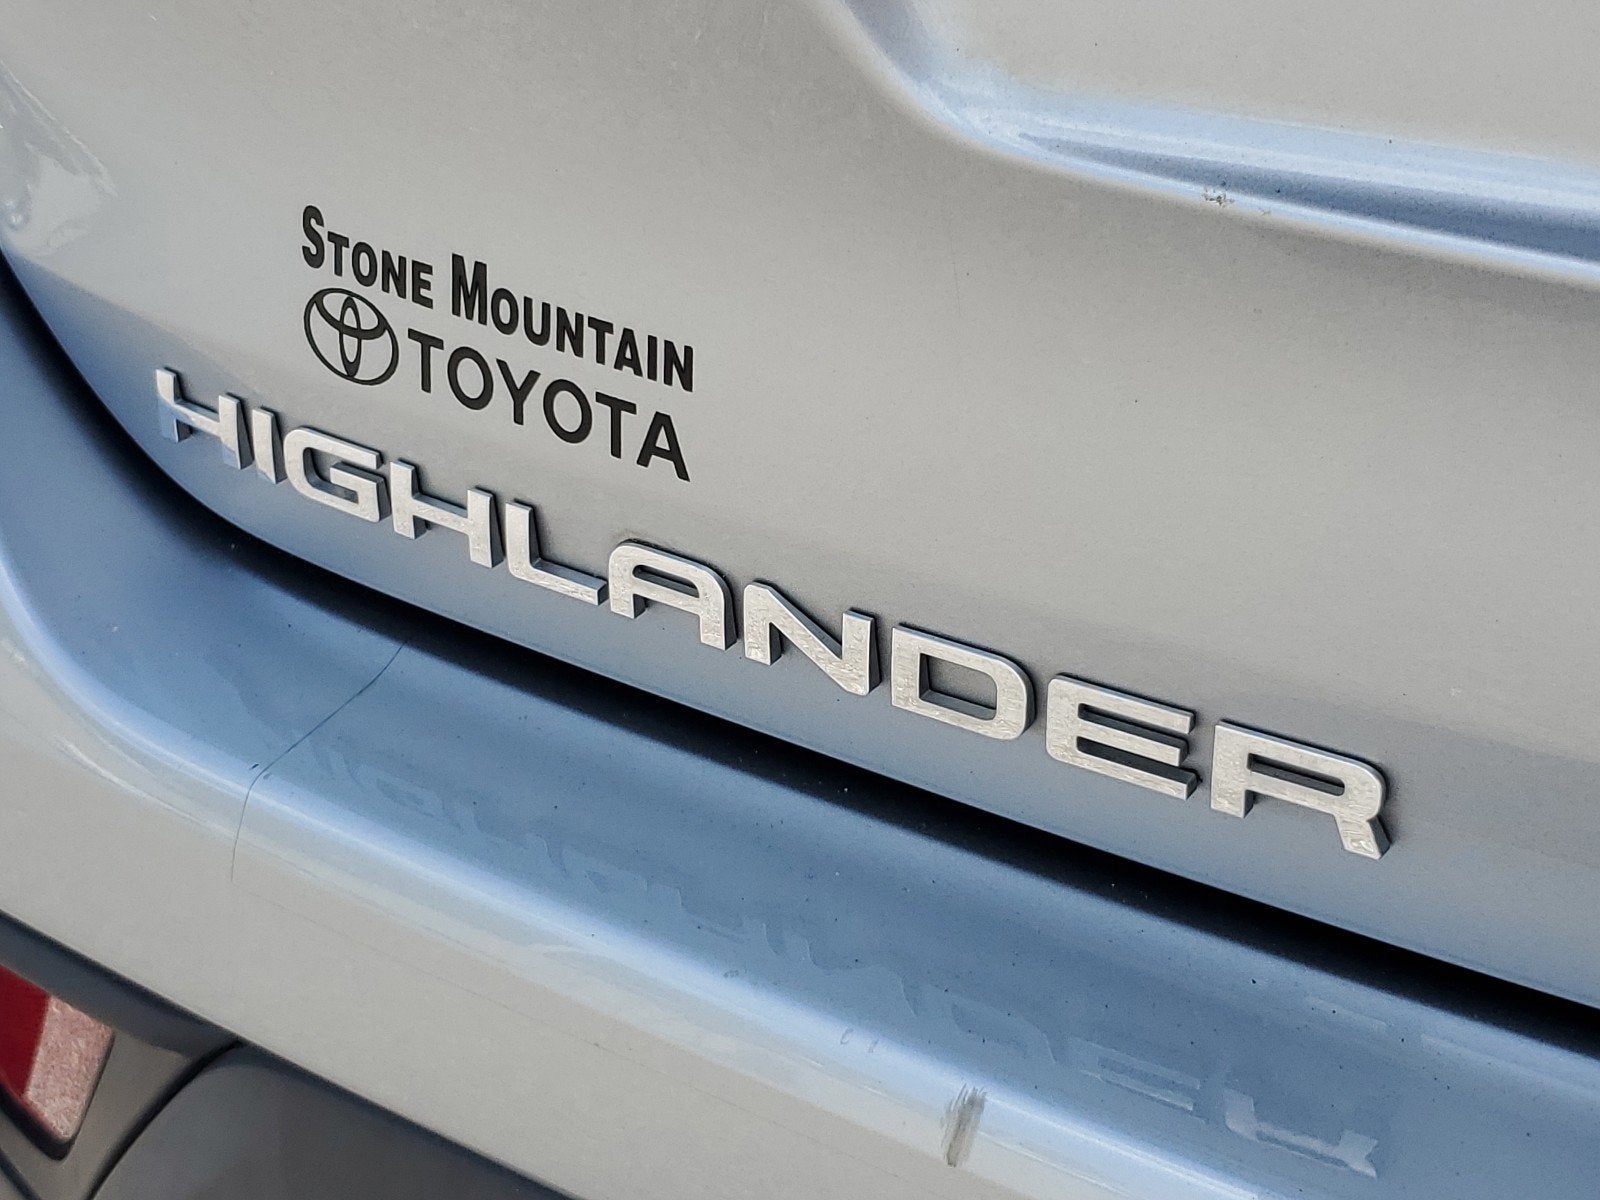 2021 Toyota Highlander XLE